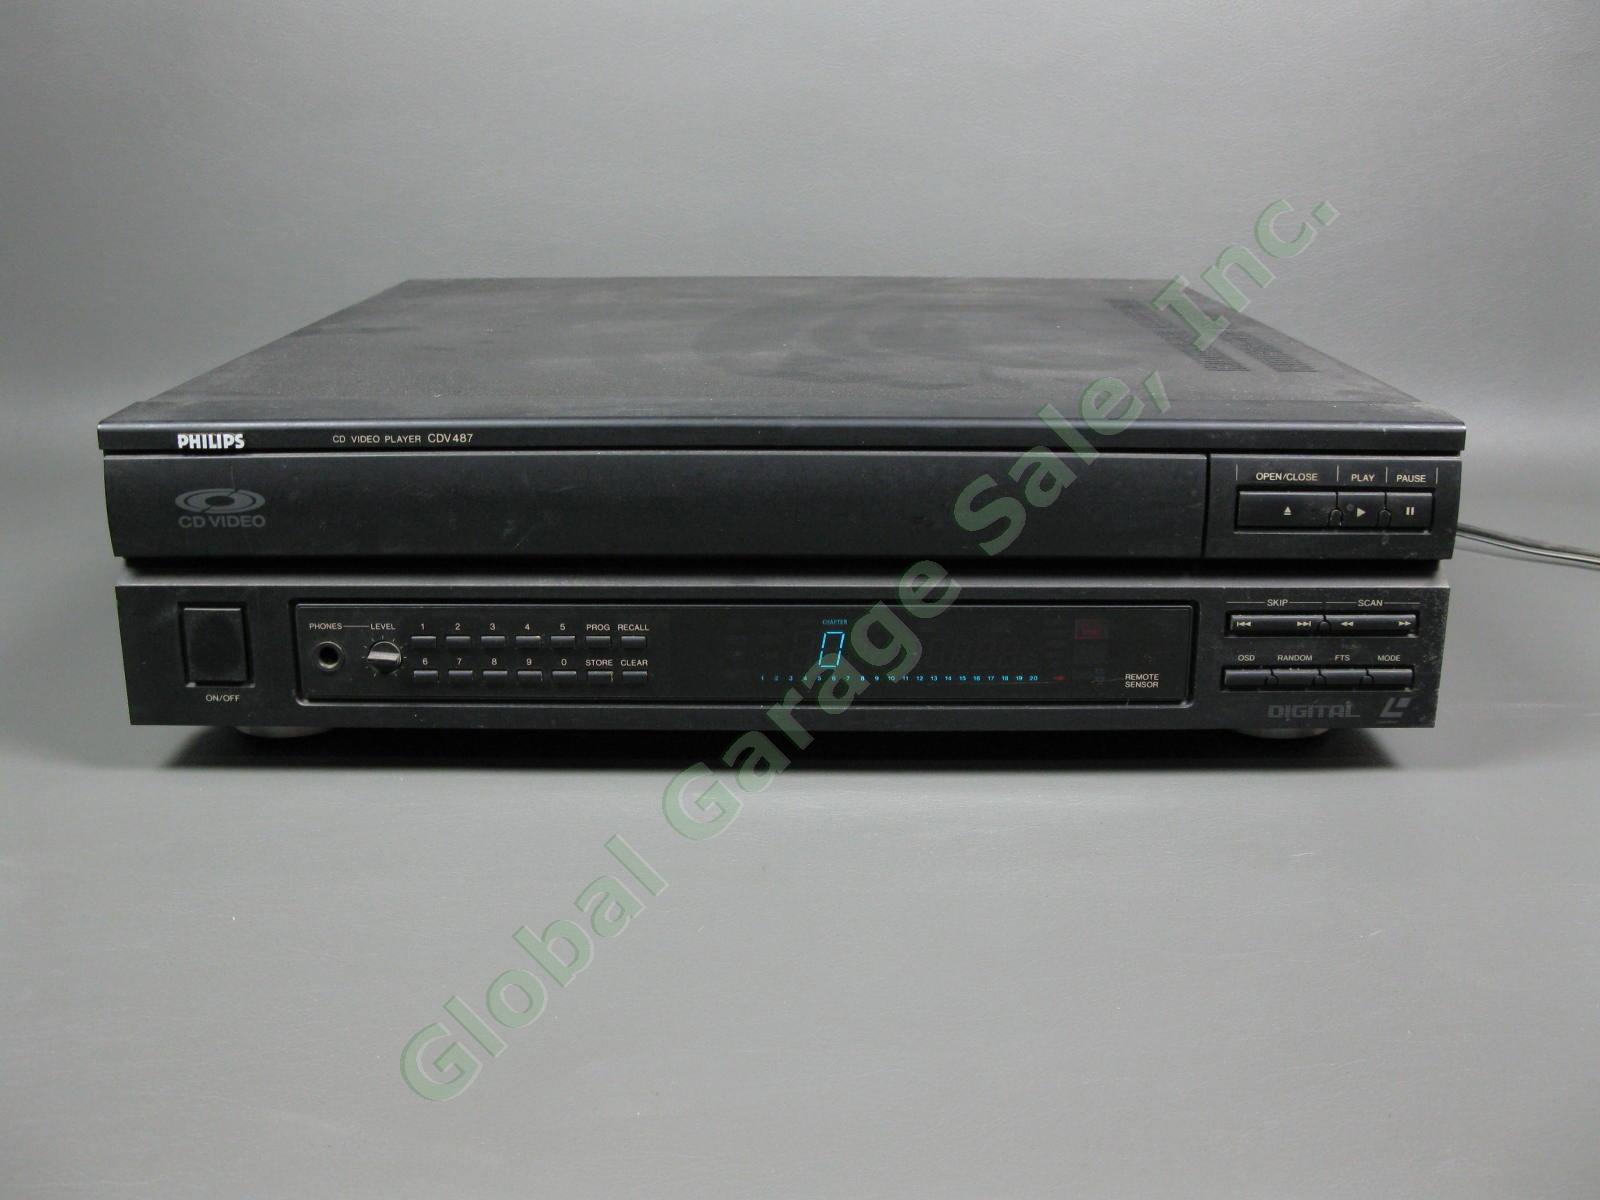 Philips CDV-487 Digital CD Laser Vision Disc Video Player TDA1541A-S1 DAC WORKS